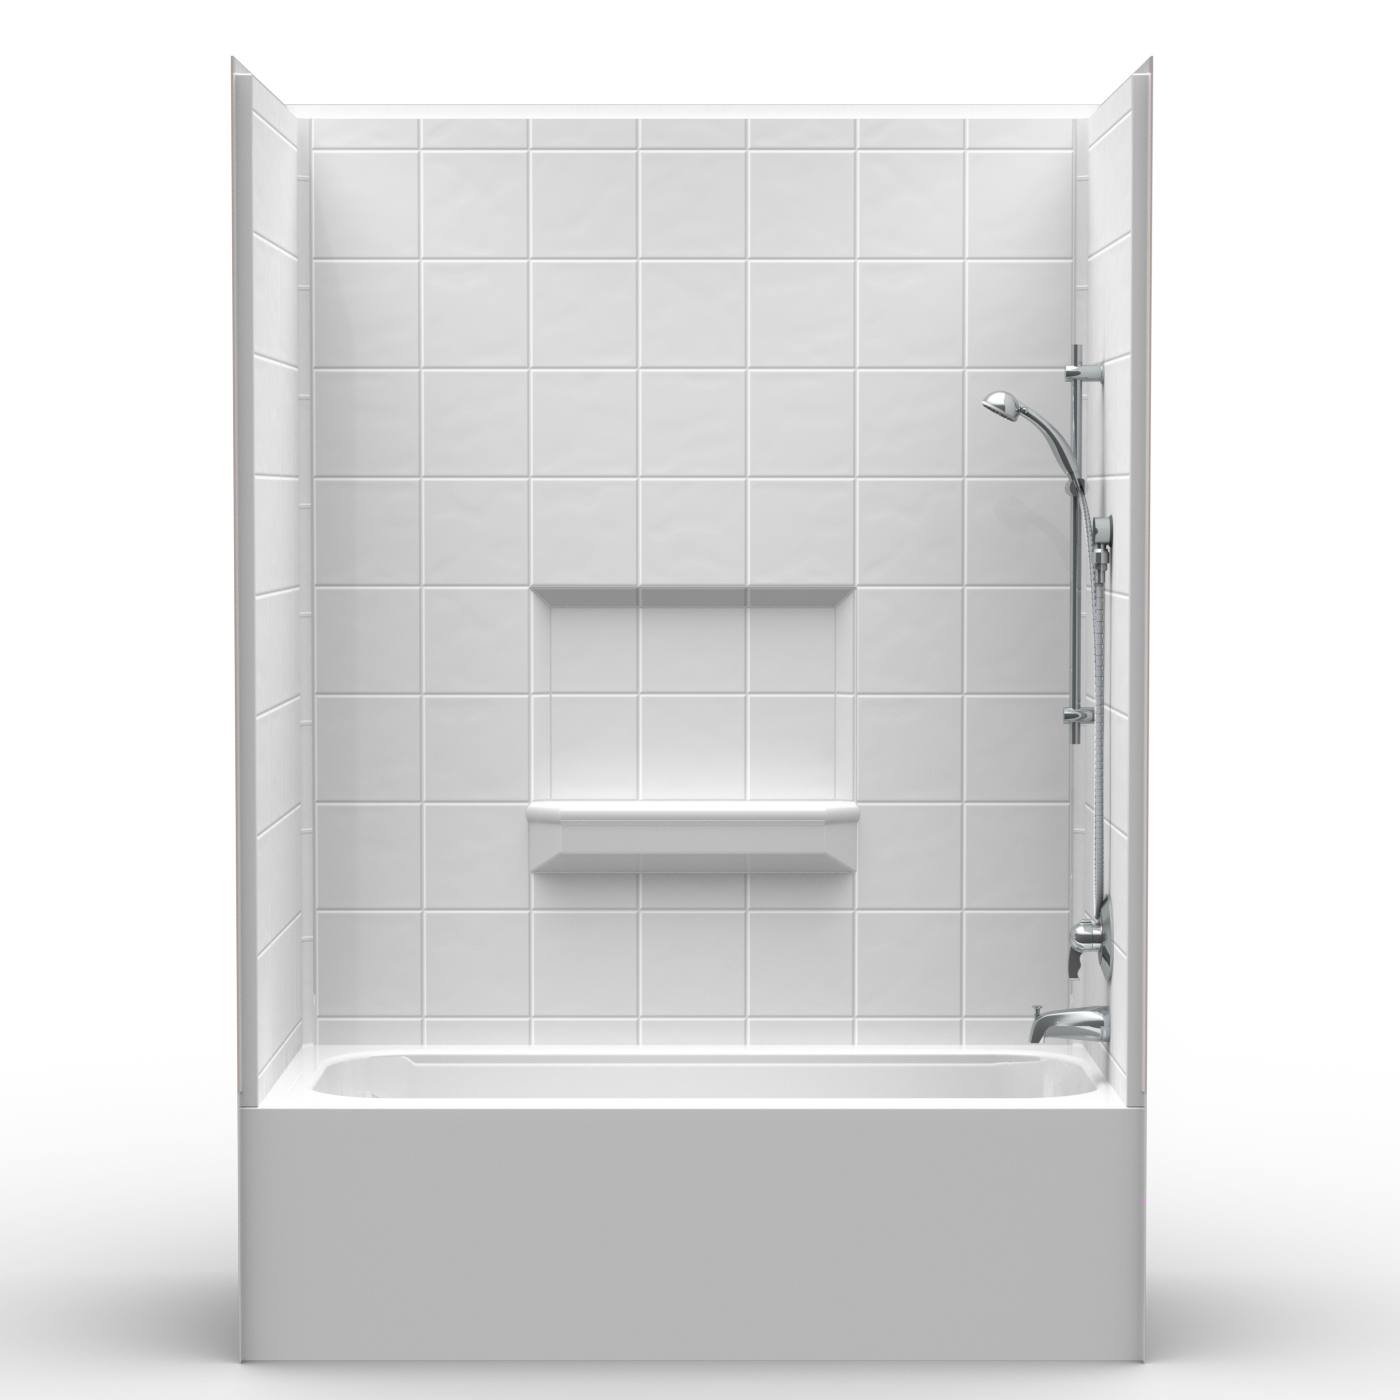 60 X 30 85 Tub Shower Combo, One Piece Bathtub Shower Combination